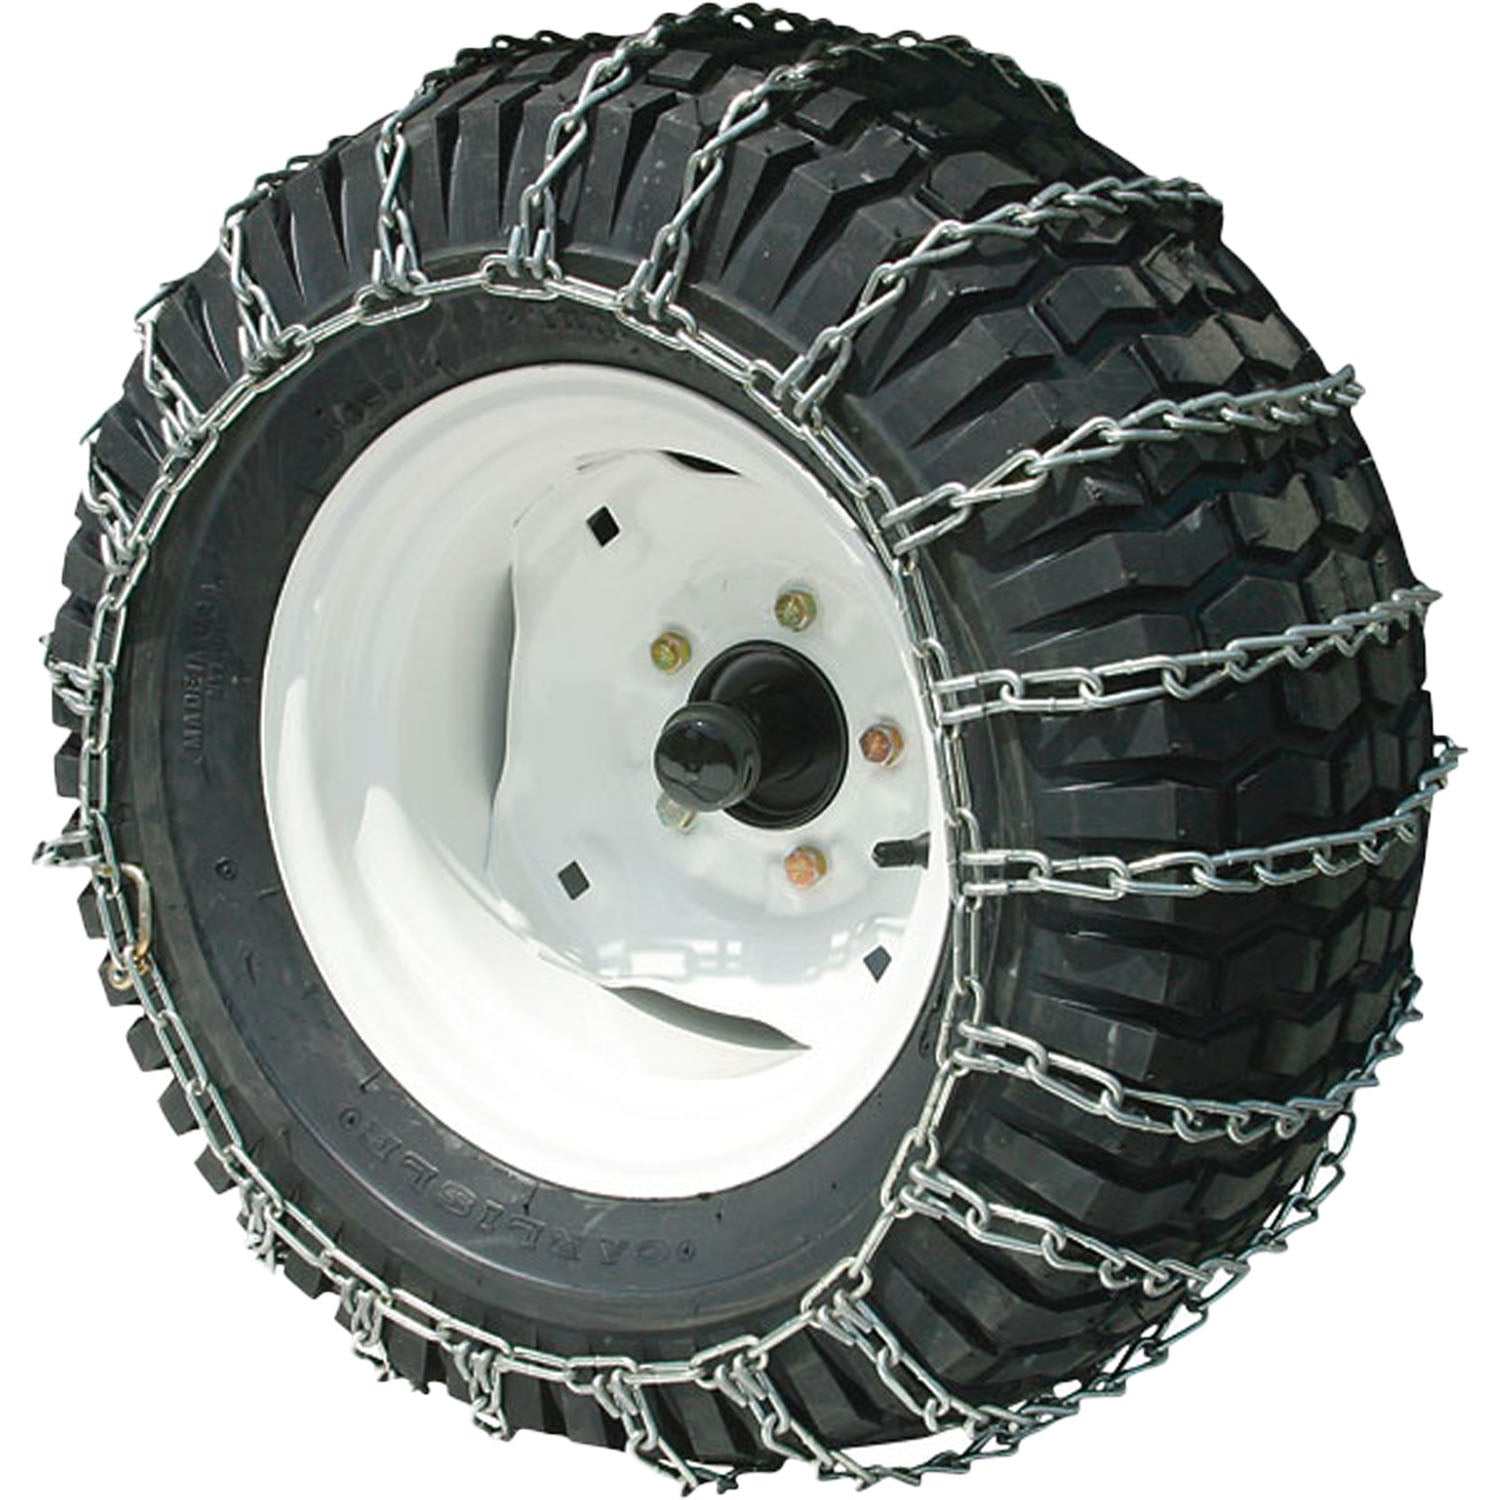 Peerless 1062256 Max Trac 2-Link 18x9.50-8 18x8.50-10 Snowblower Tire Chains